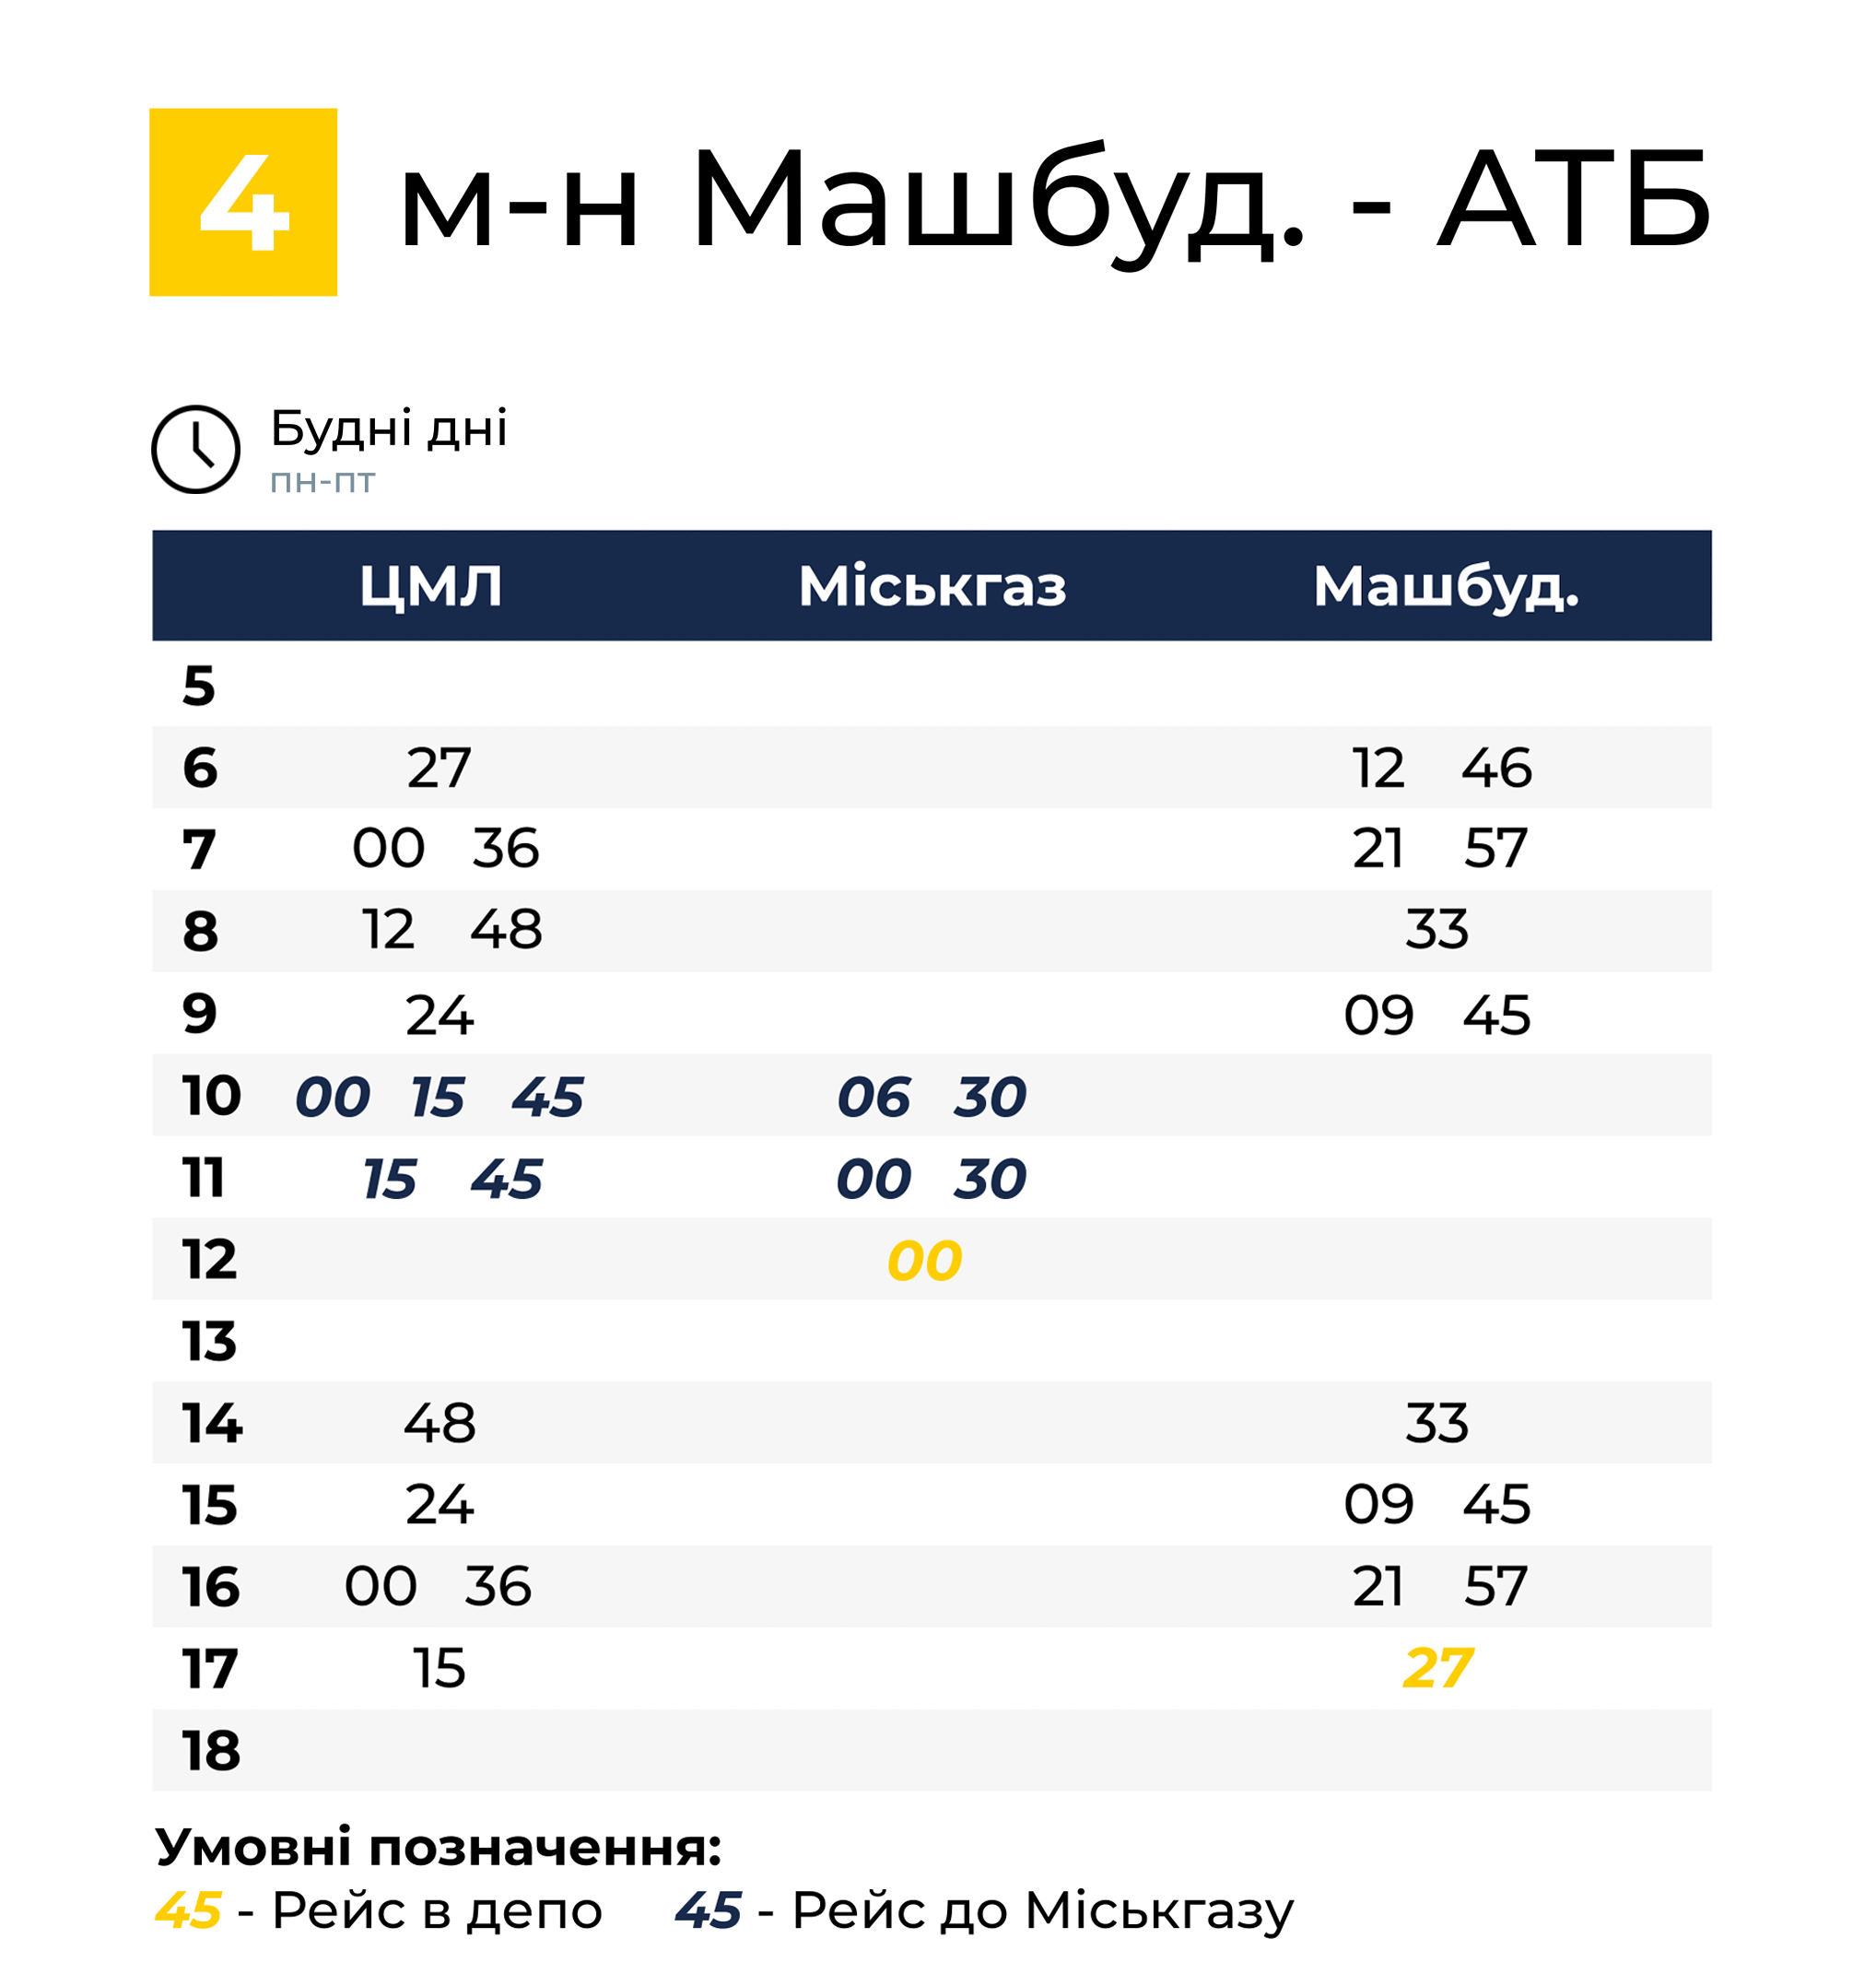 Družkivka — Timetable